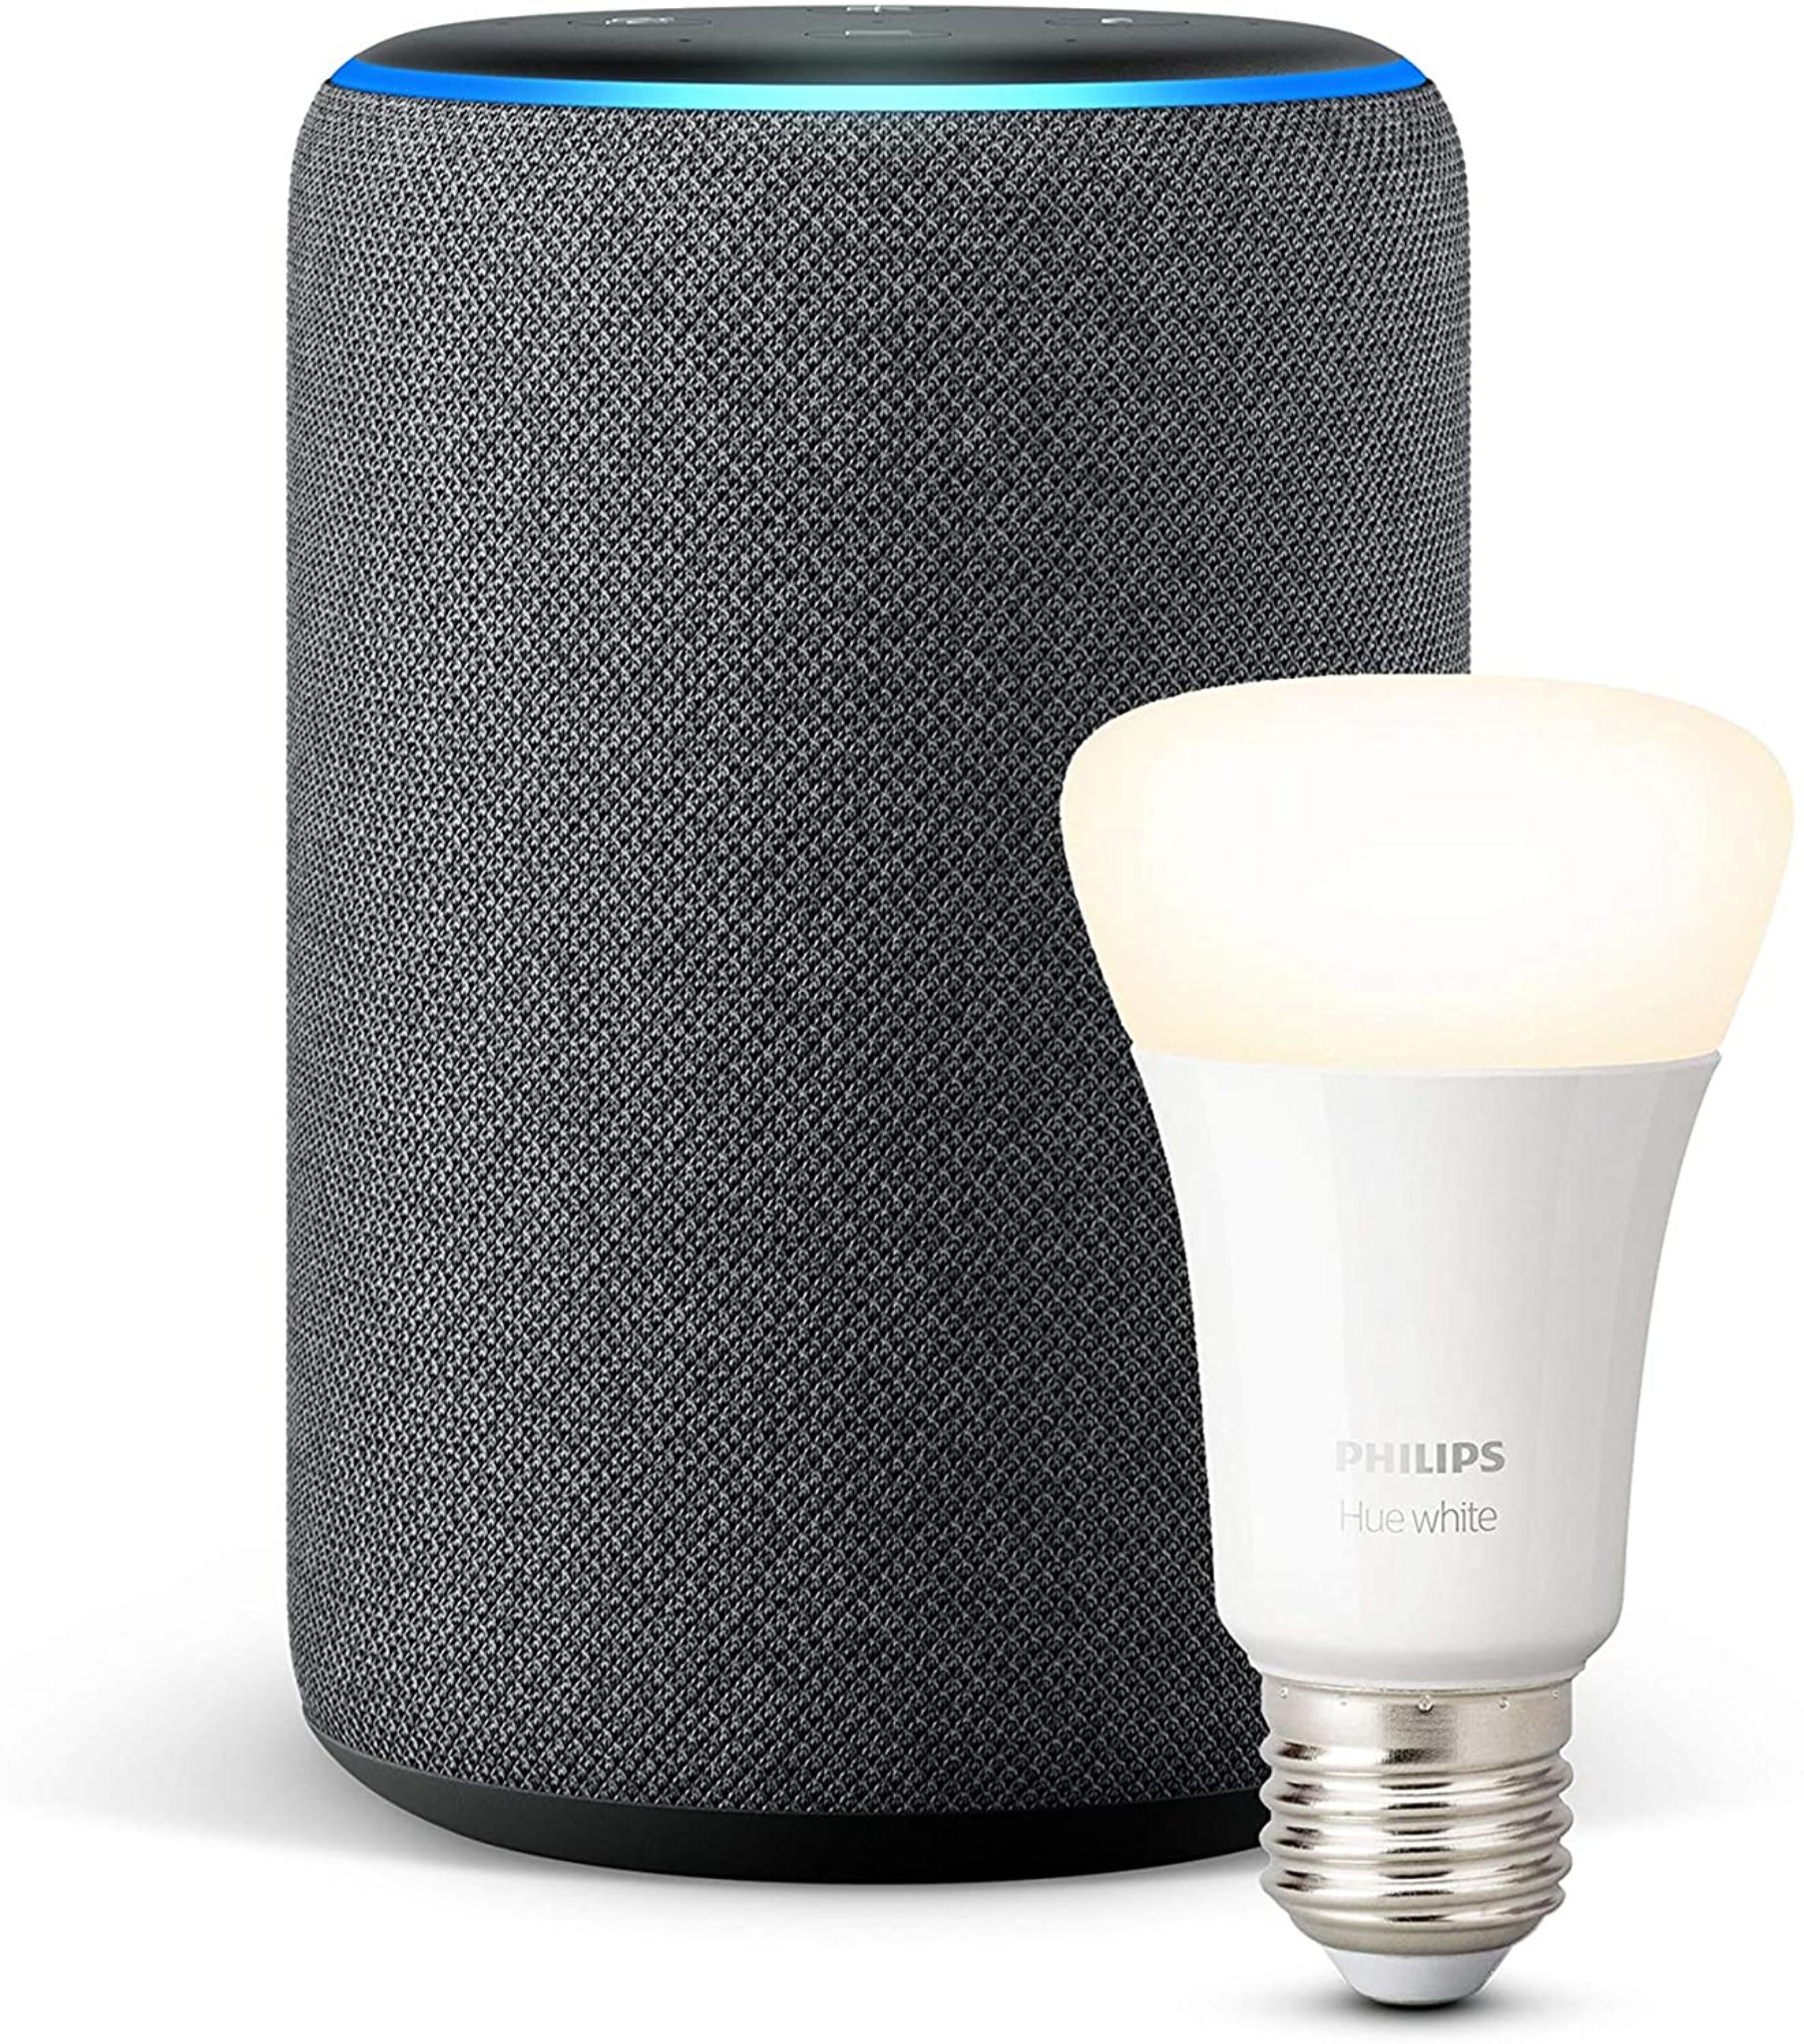 Echo Plus + Philips Hue White LED-Lampe • dealaholic.de